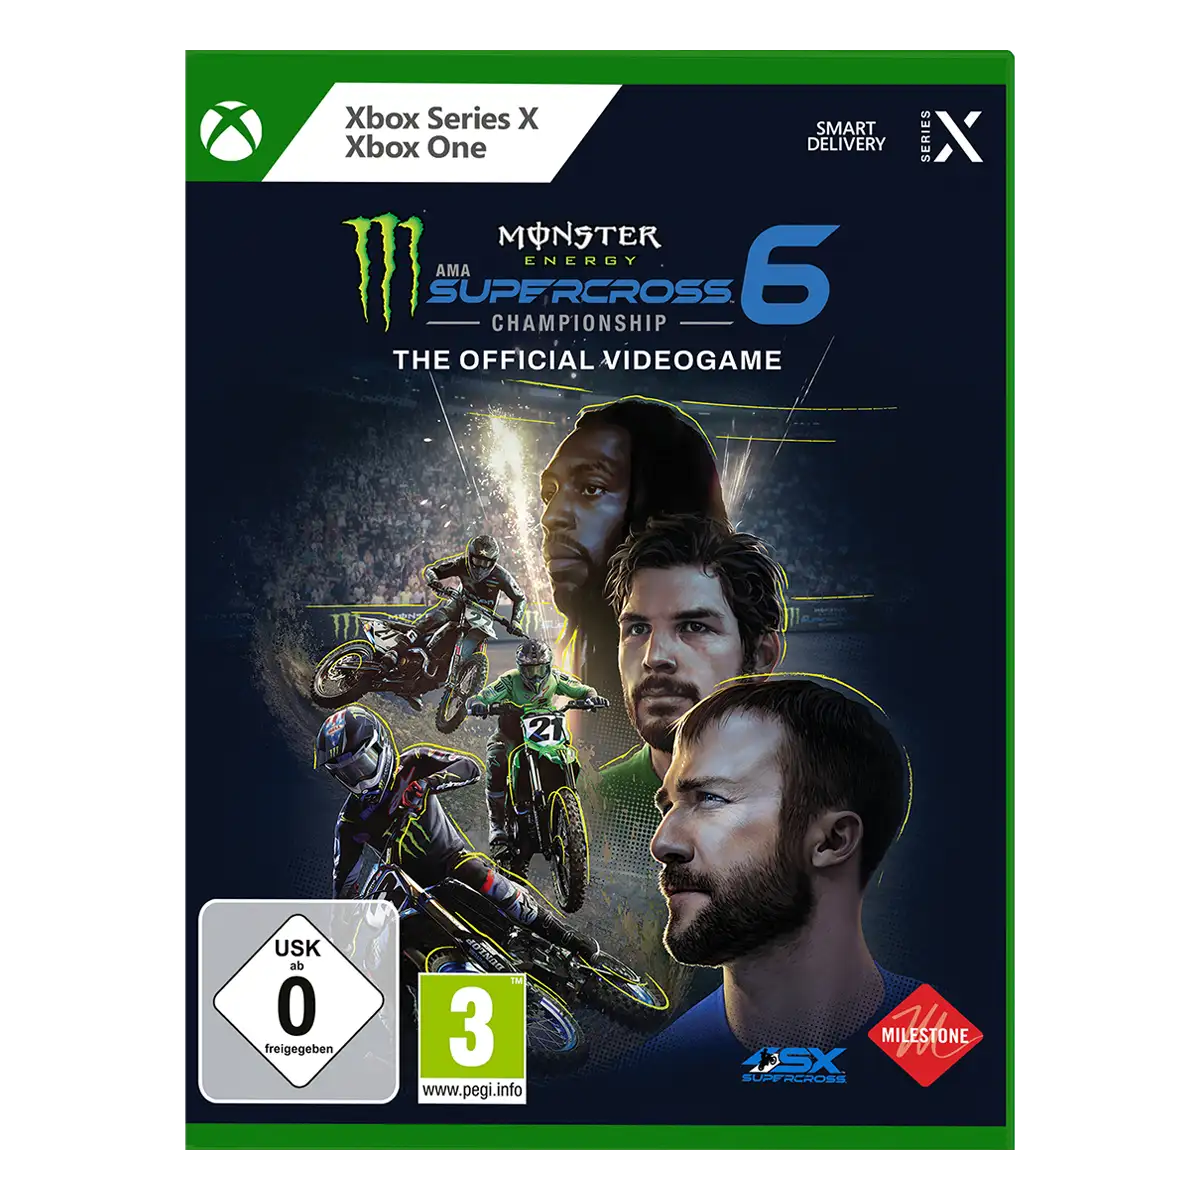 Mato Anomalies Day One Edition (Xbox One / Xbox Series X)